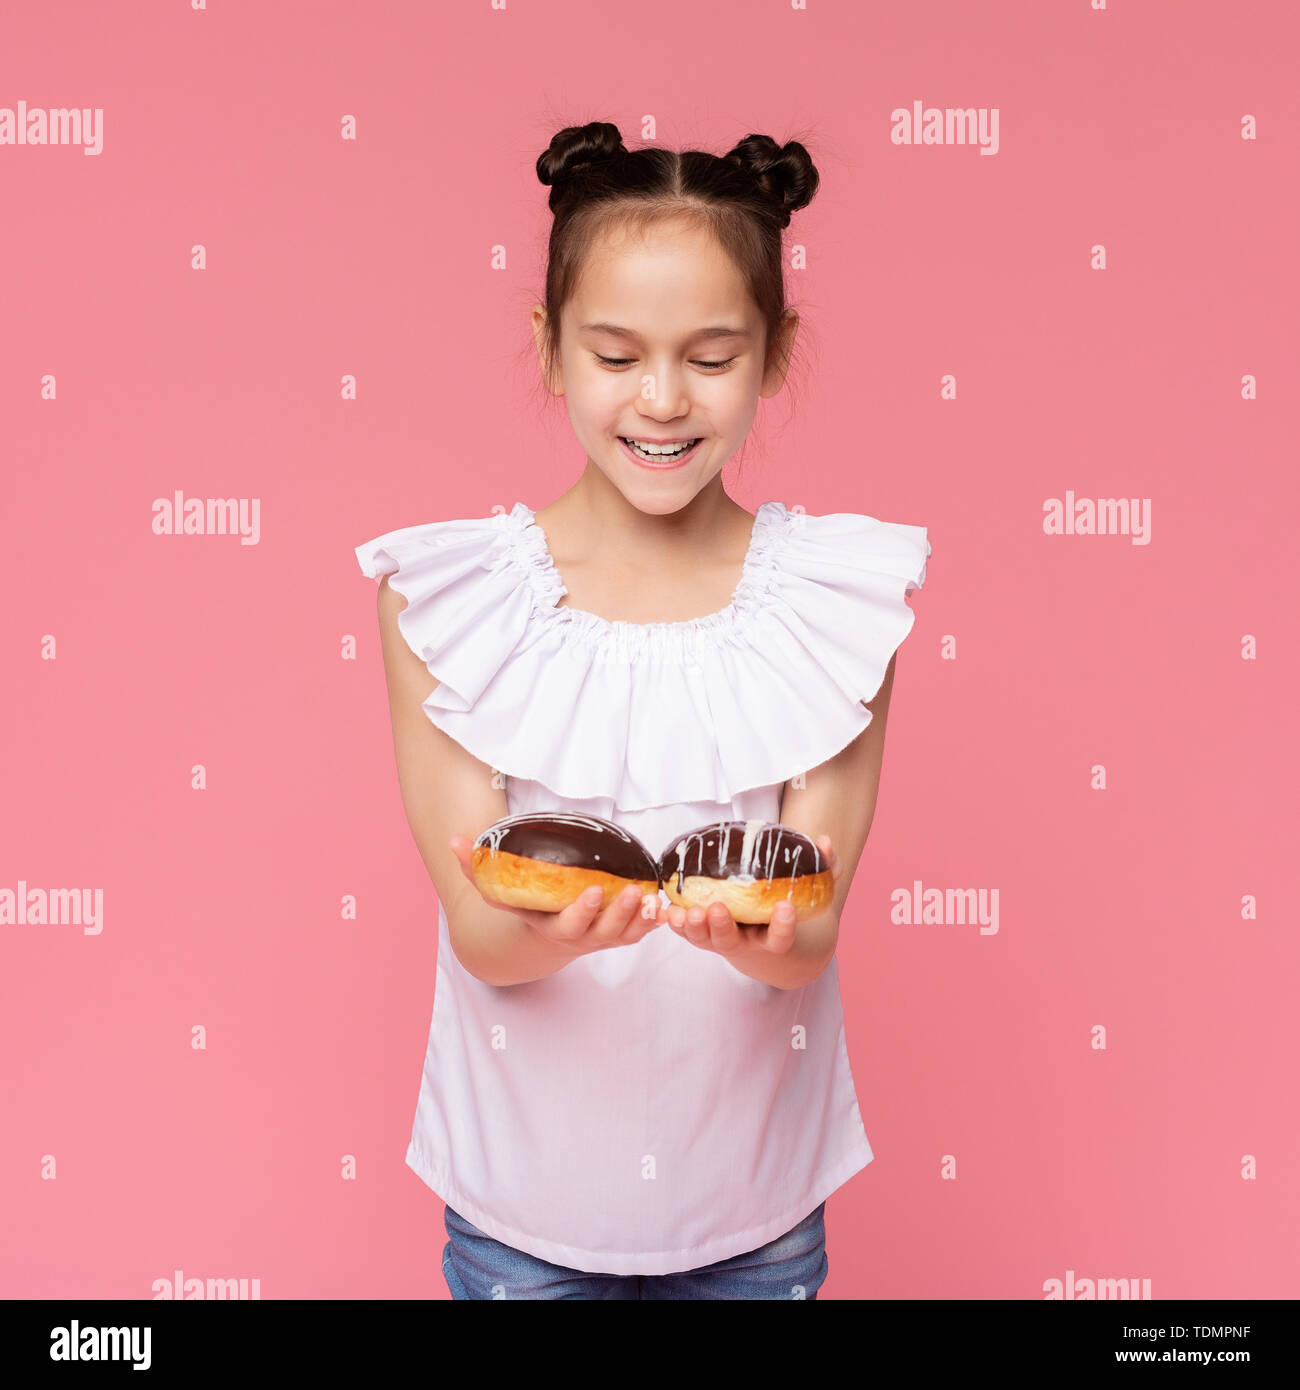 Cheerful little girl enjoying chocolate covered donuts Stock Photo